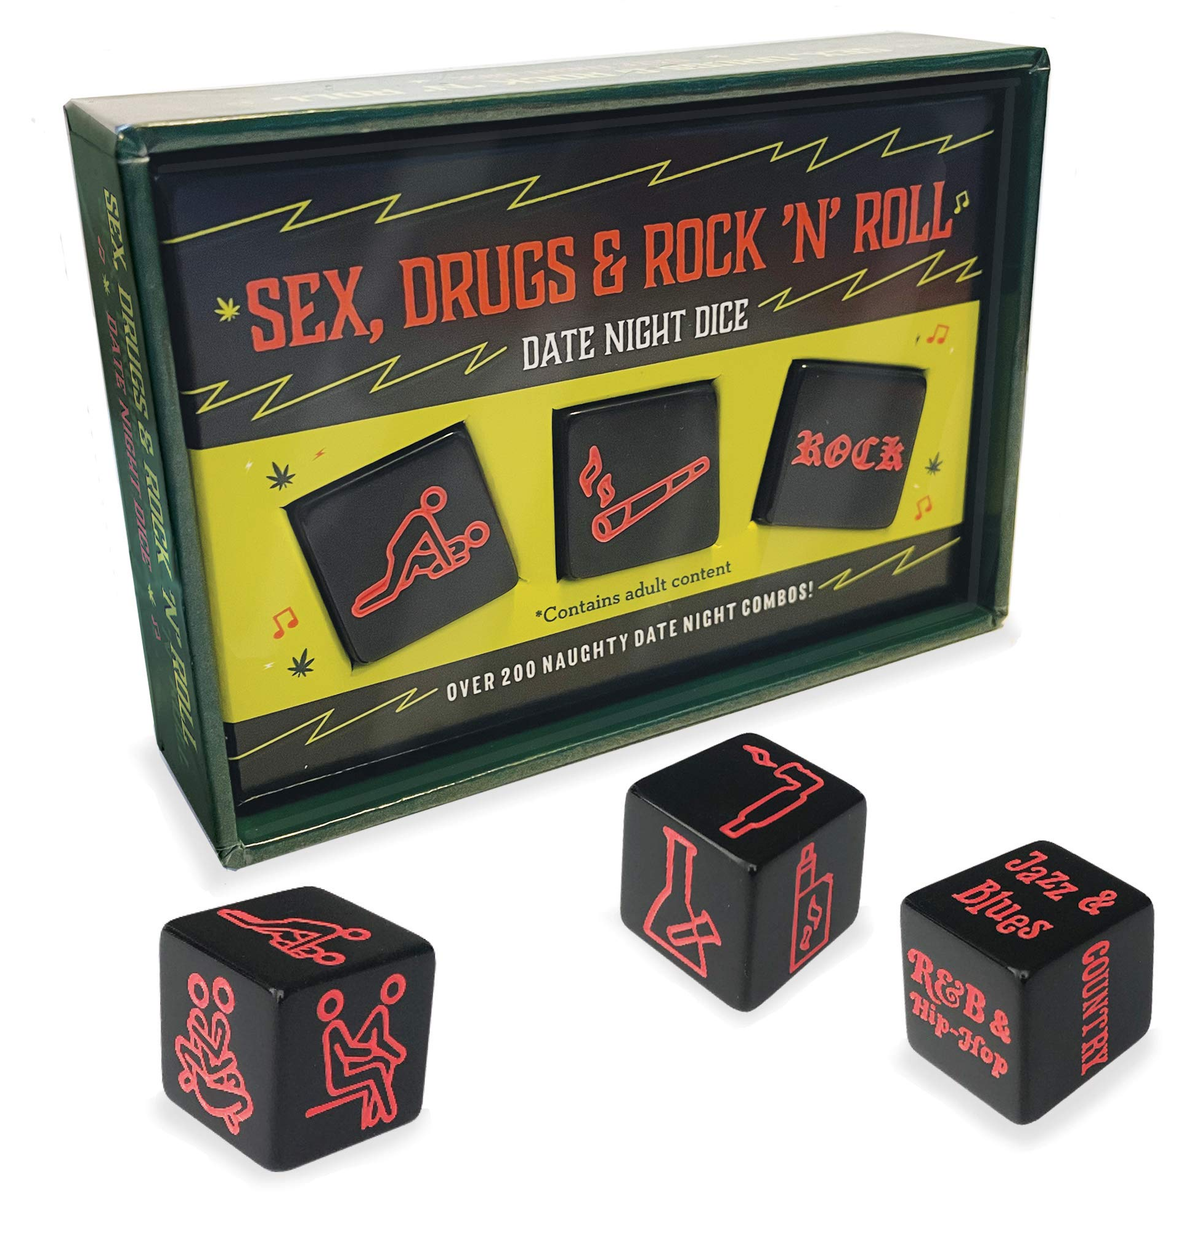 Sex, Drugs & Rock 'n' Roll Date Night Dice